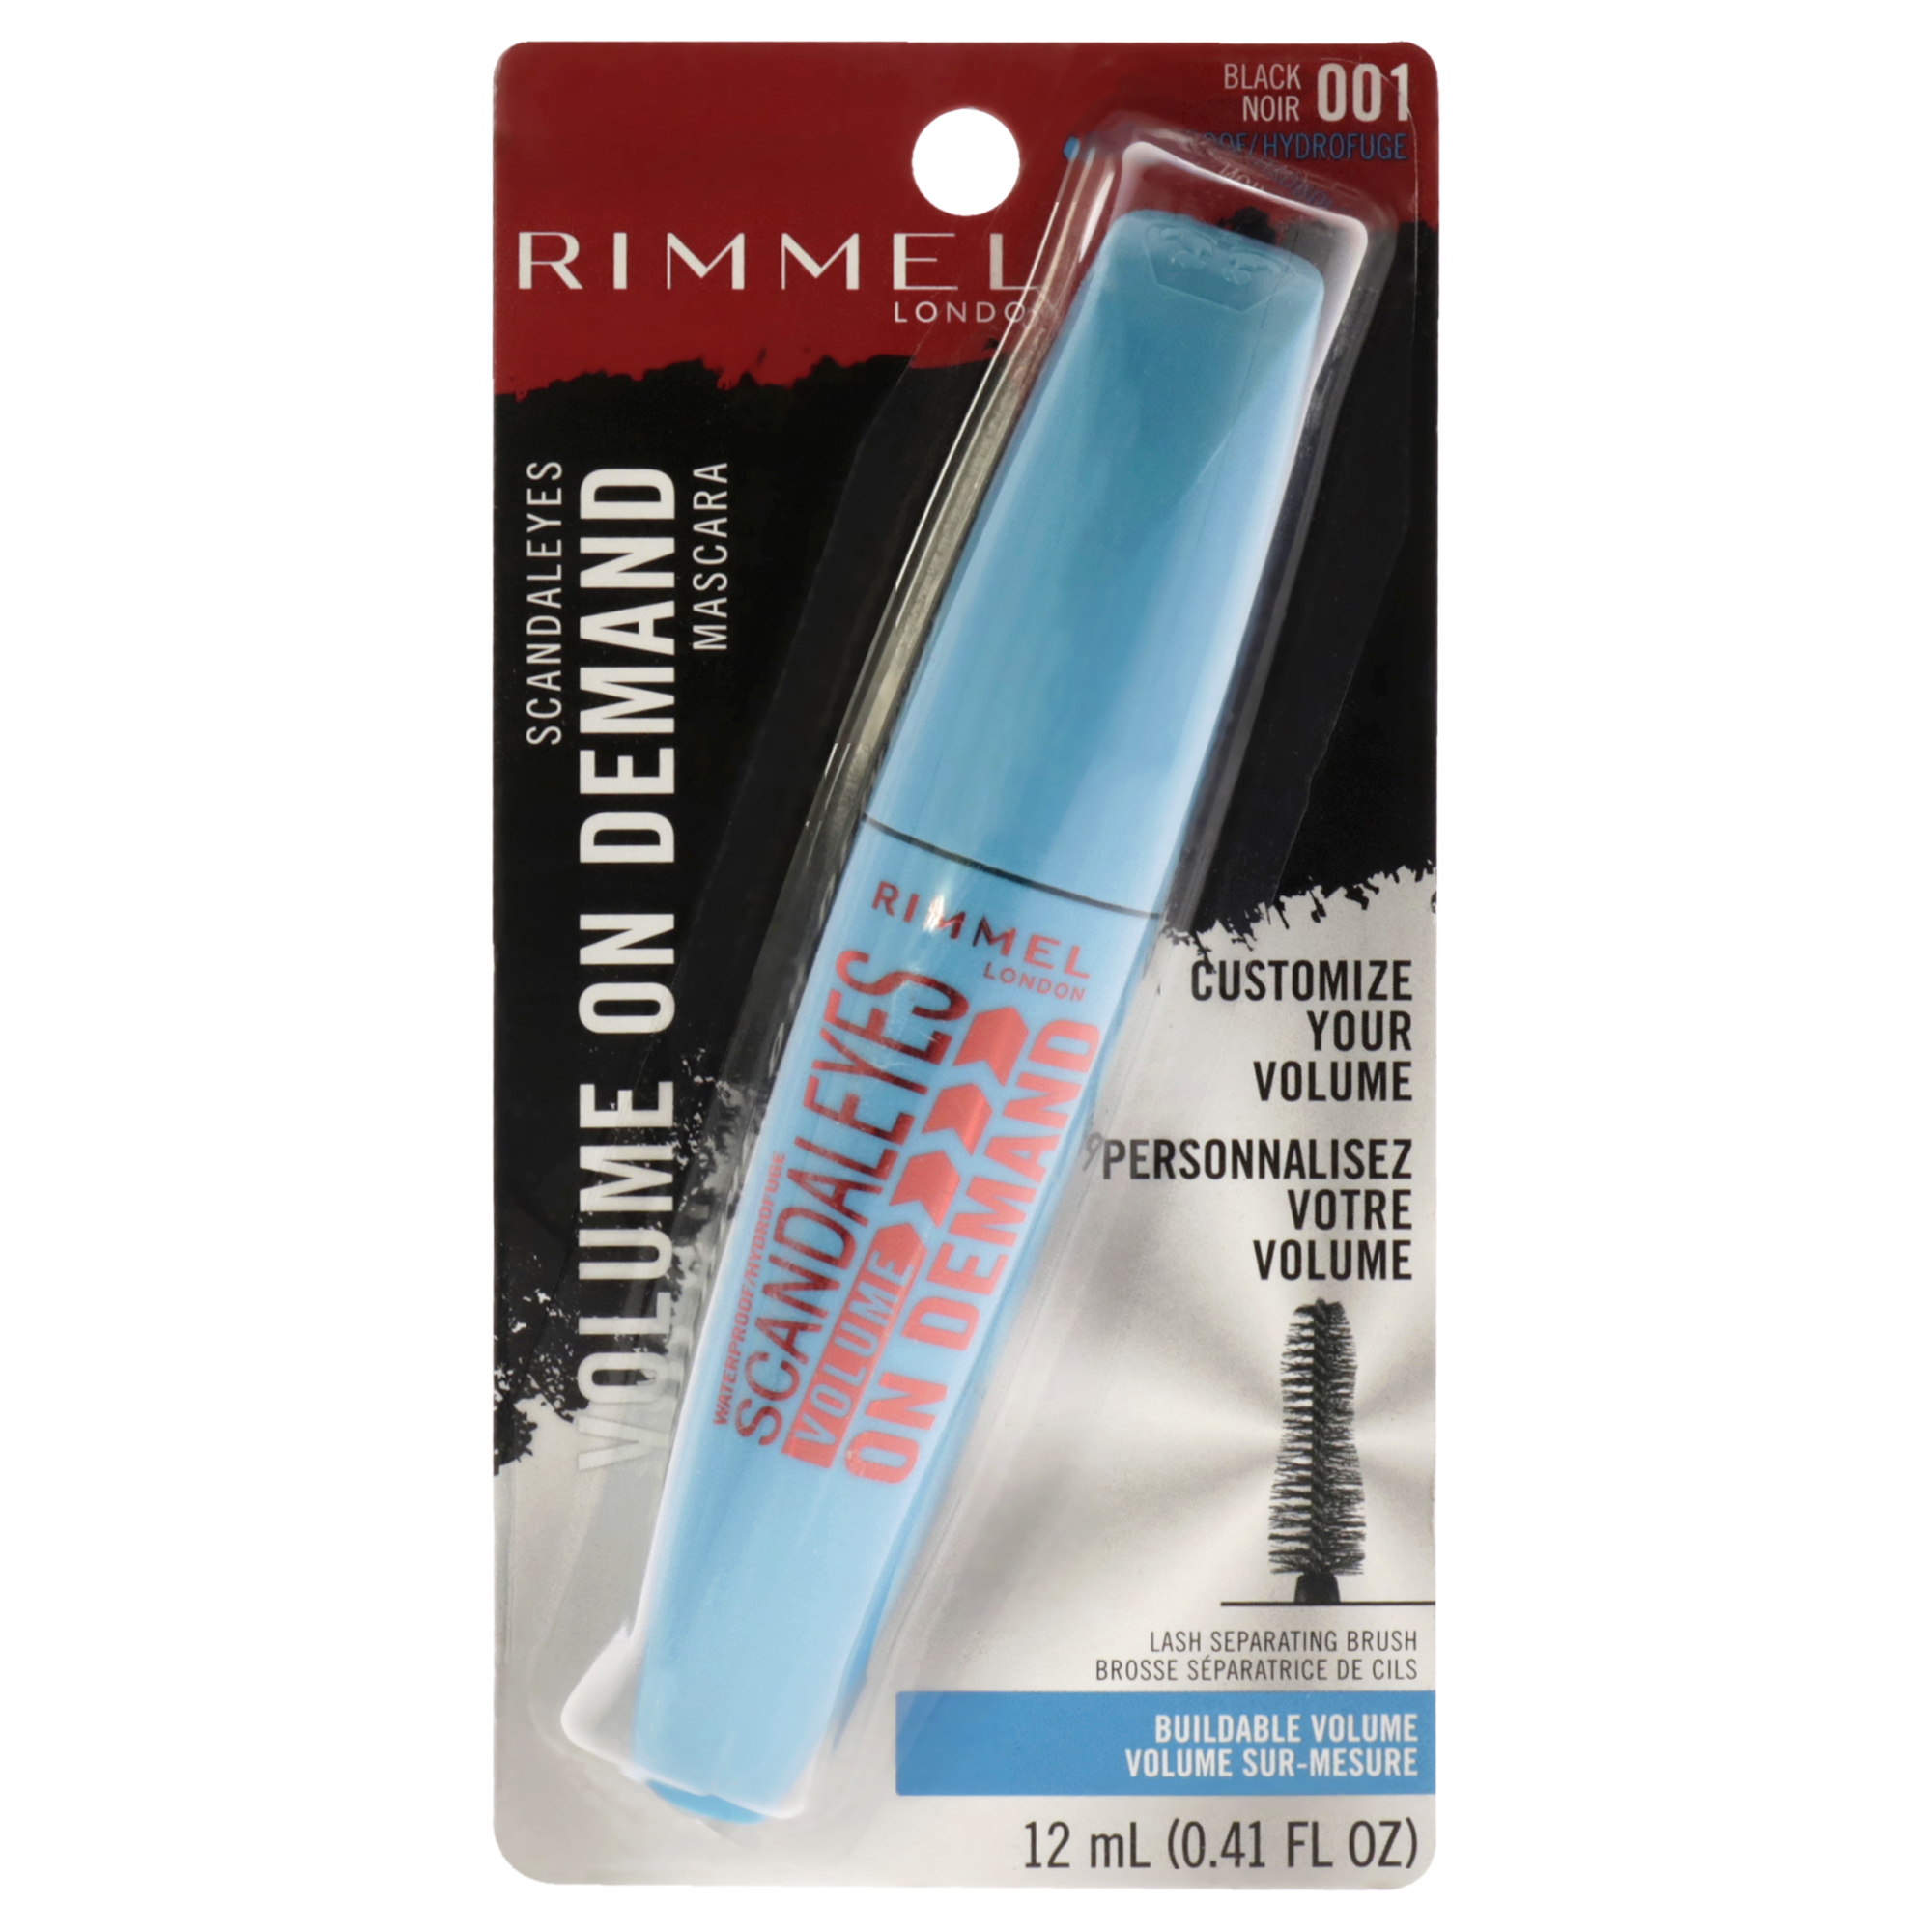 Rimmel London Scandaleyes Volume On Demand Waterproof Mascara - 001 Black , 0.41 oz Lip Liner - image 1 of 9